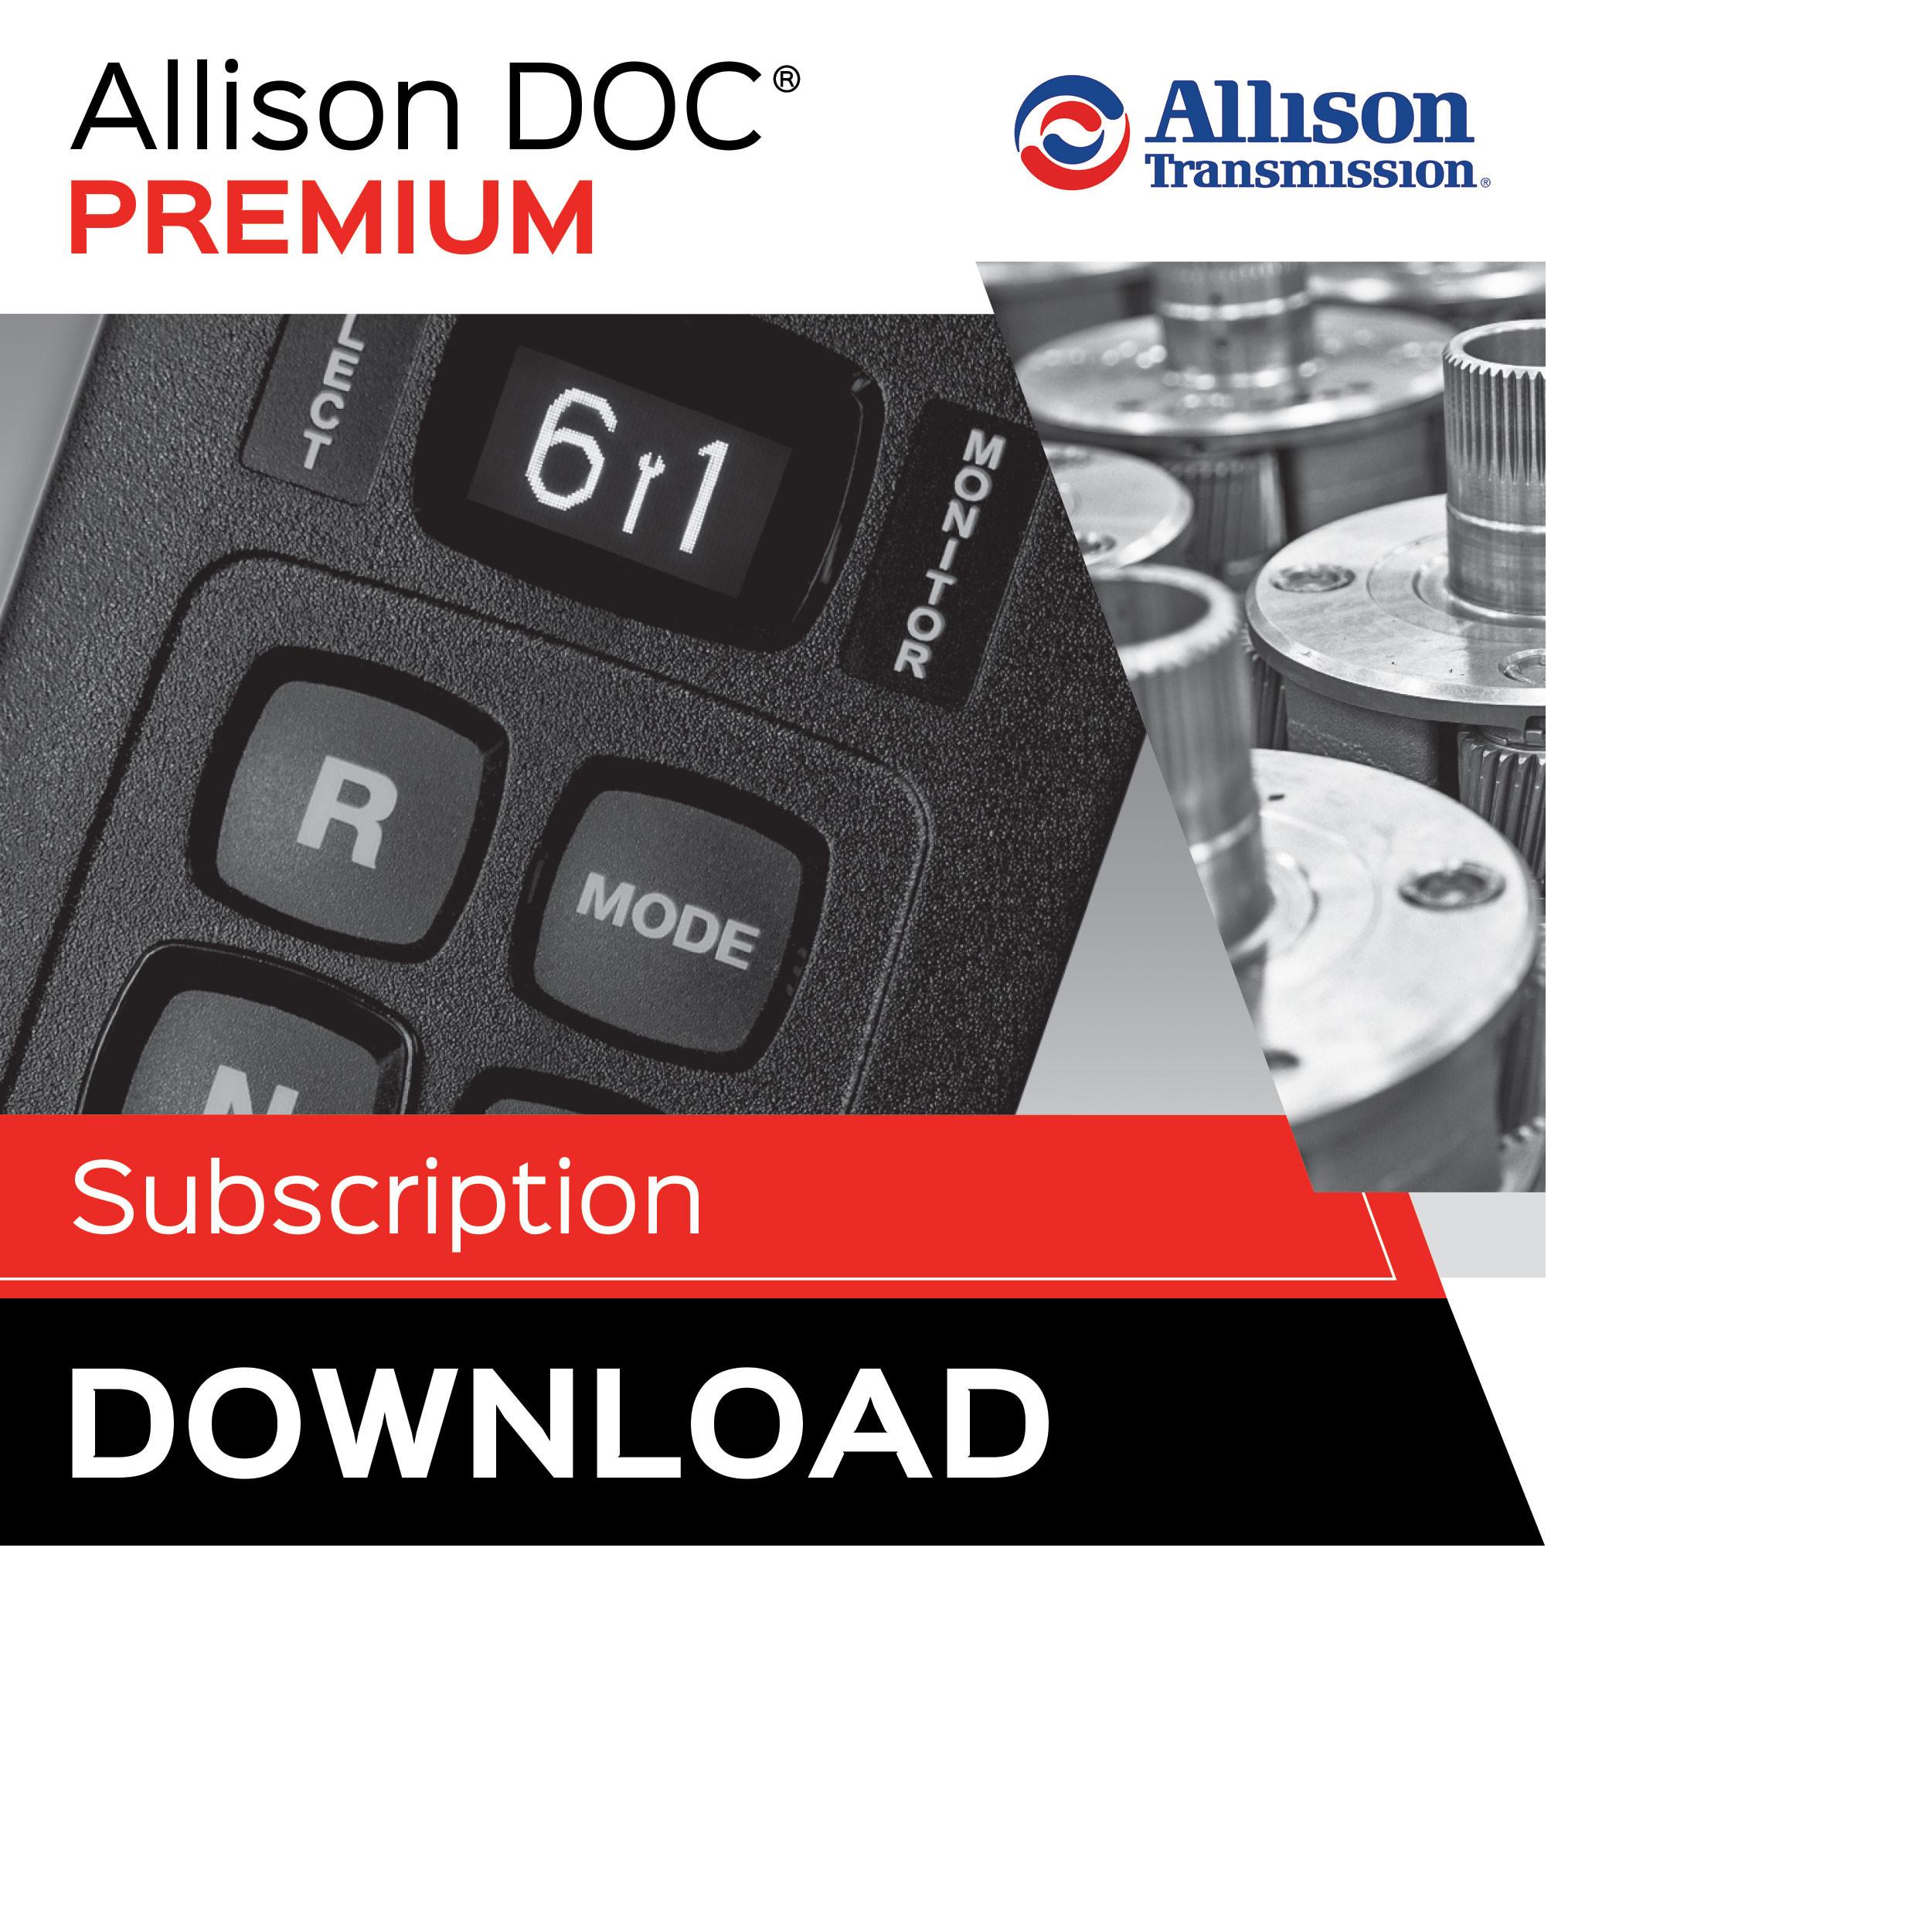 Allison DOC Premium Software - Digital Download